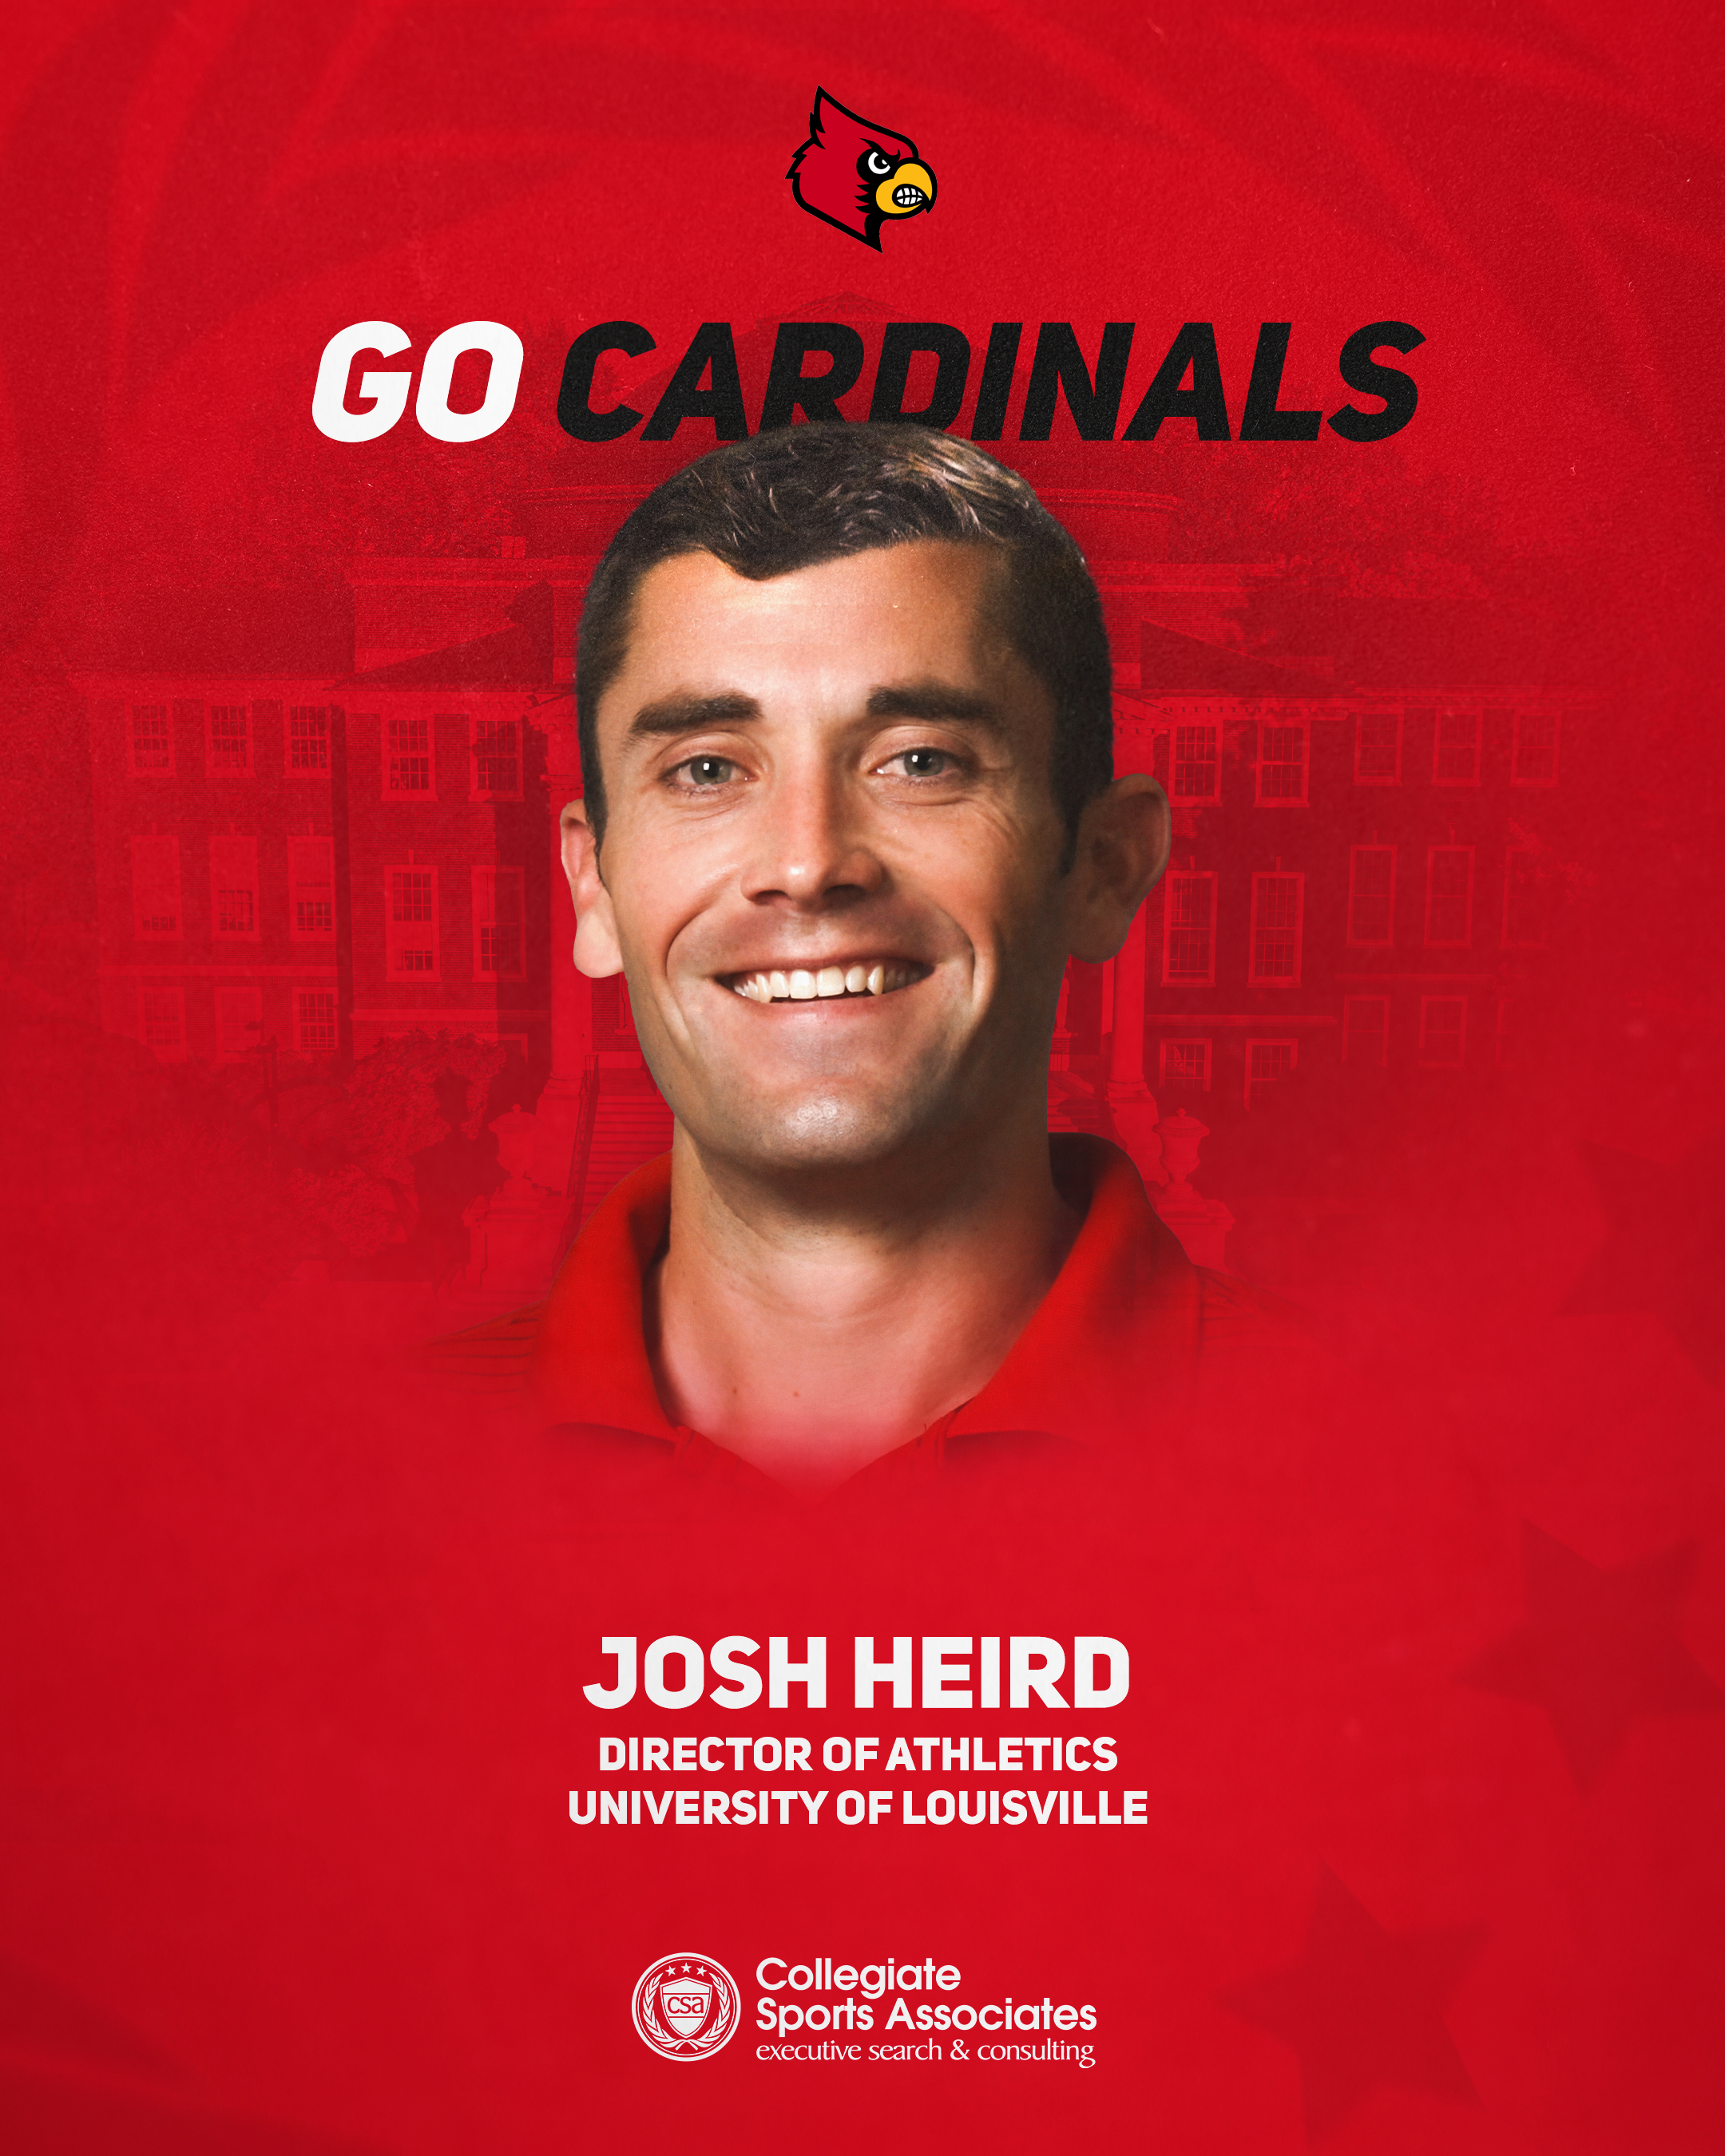 Louisville selects Heird to lead Cardinals - Collegiate Sports Associates